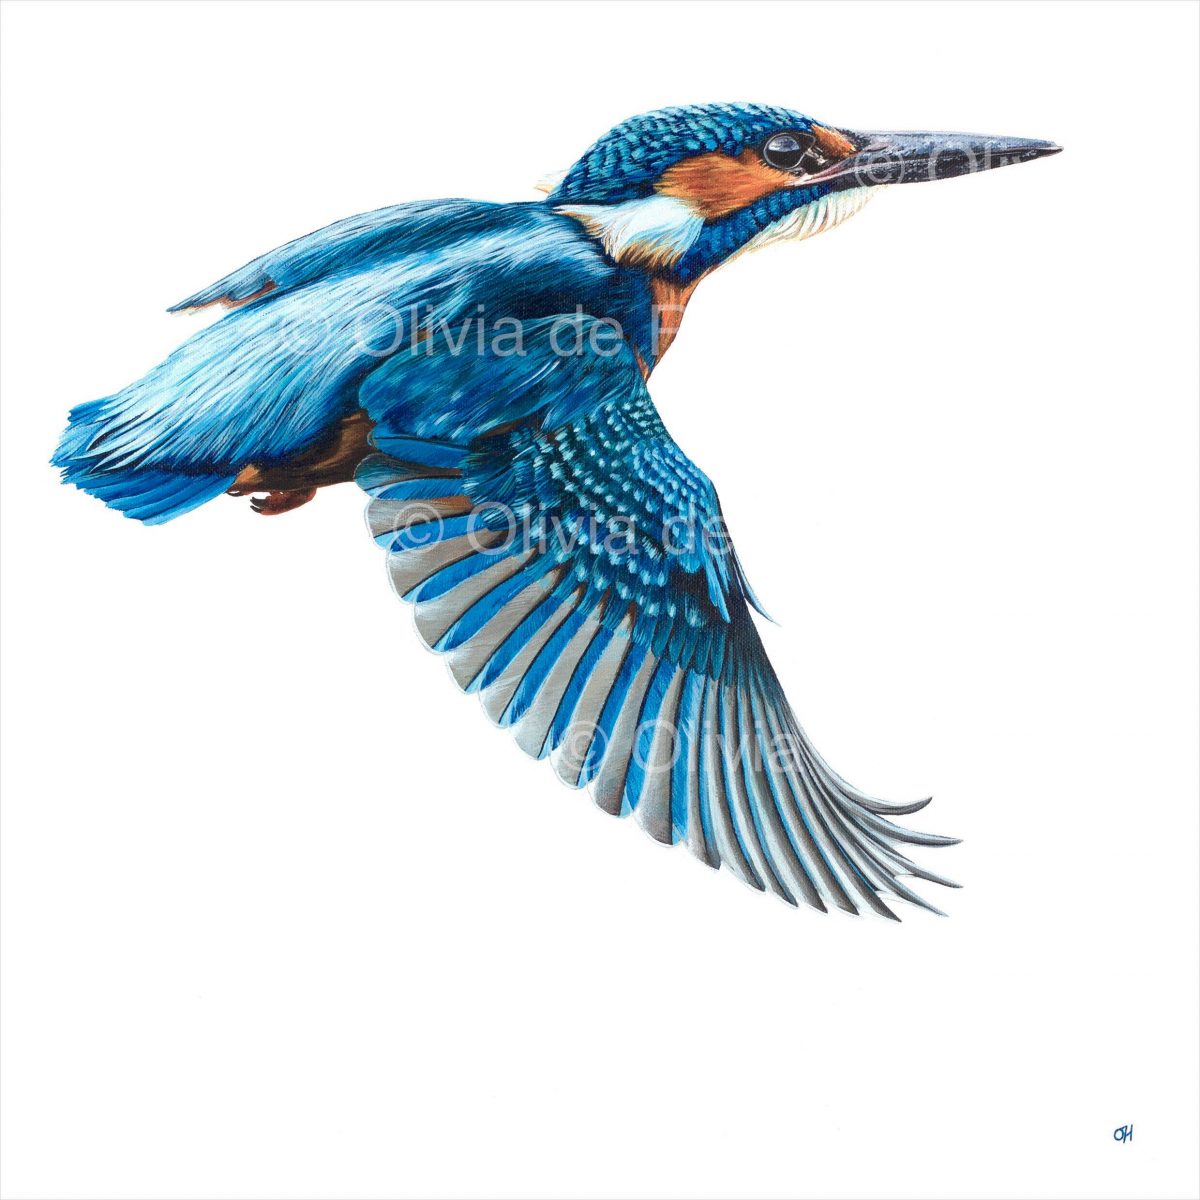 Kingfisher fine art giclée print